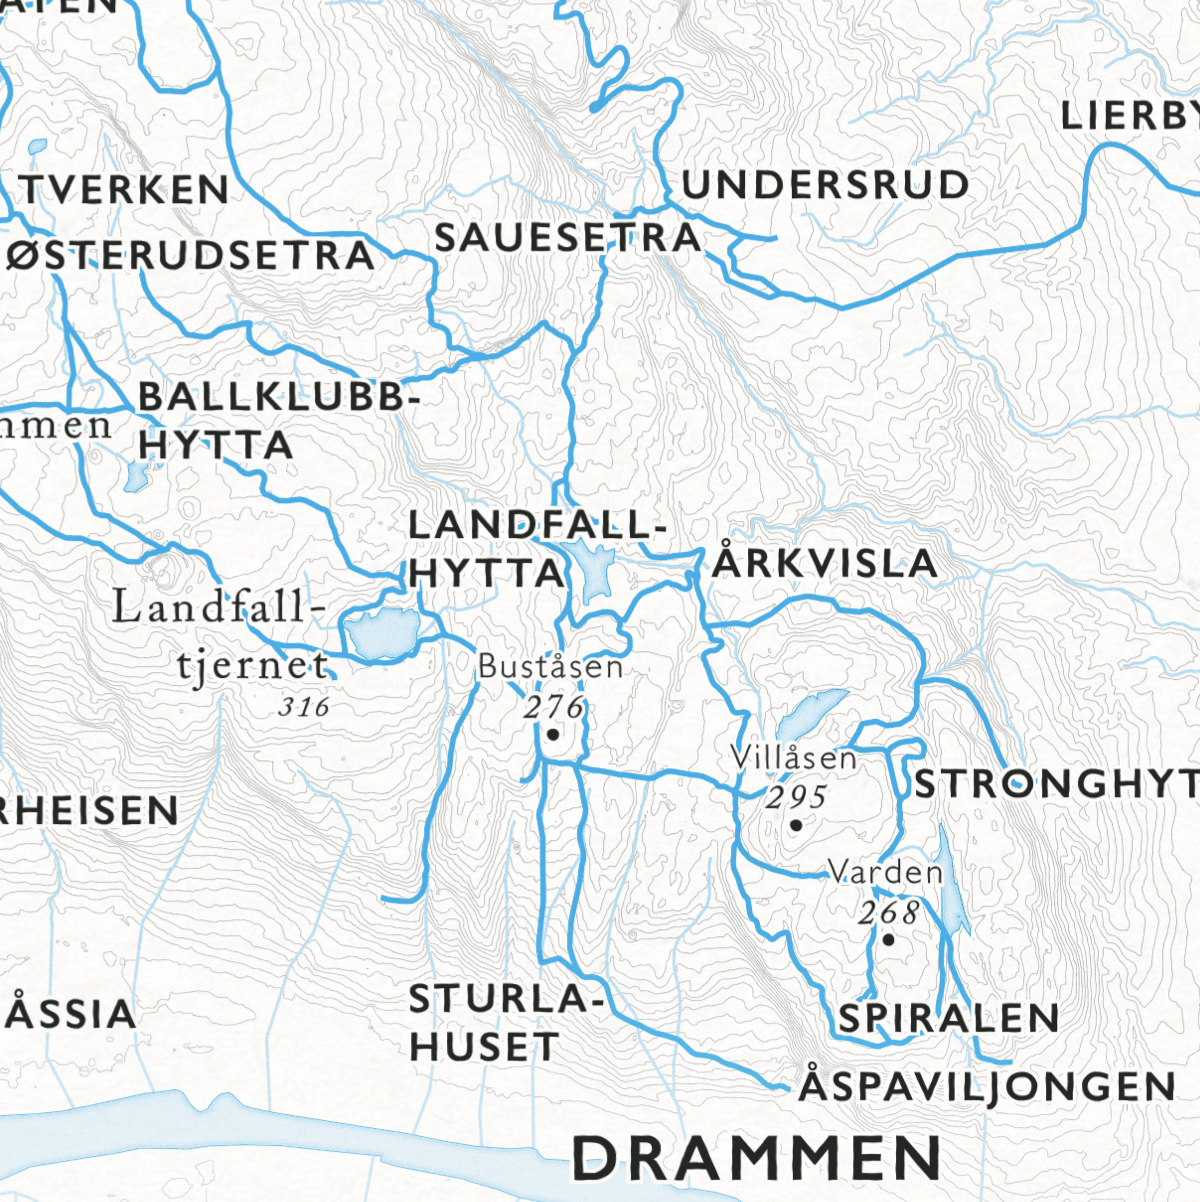 Skikart Finnemarka som viser Årksvisla, Sturlahuset, Spiralen, Landfallhytta og Sausetra